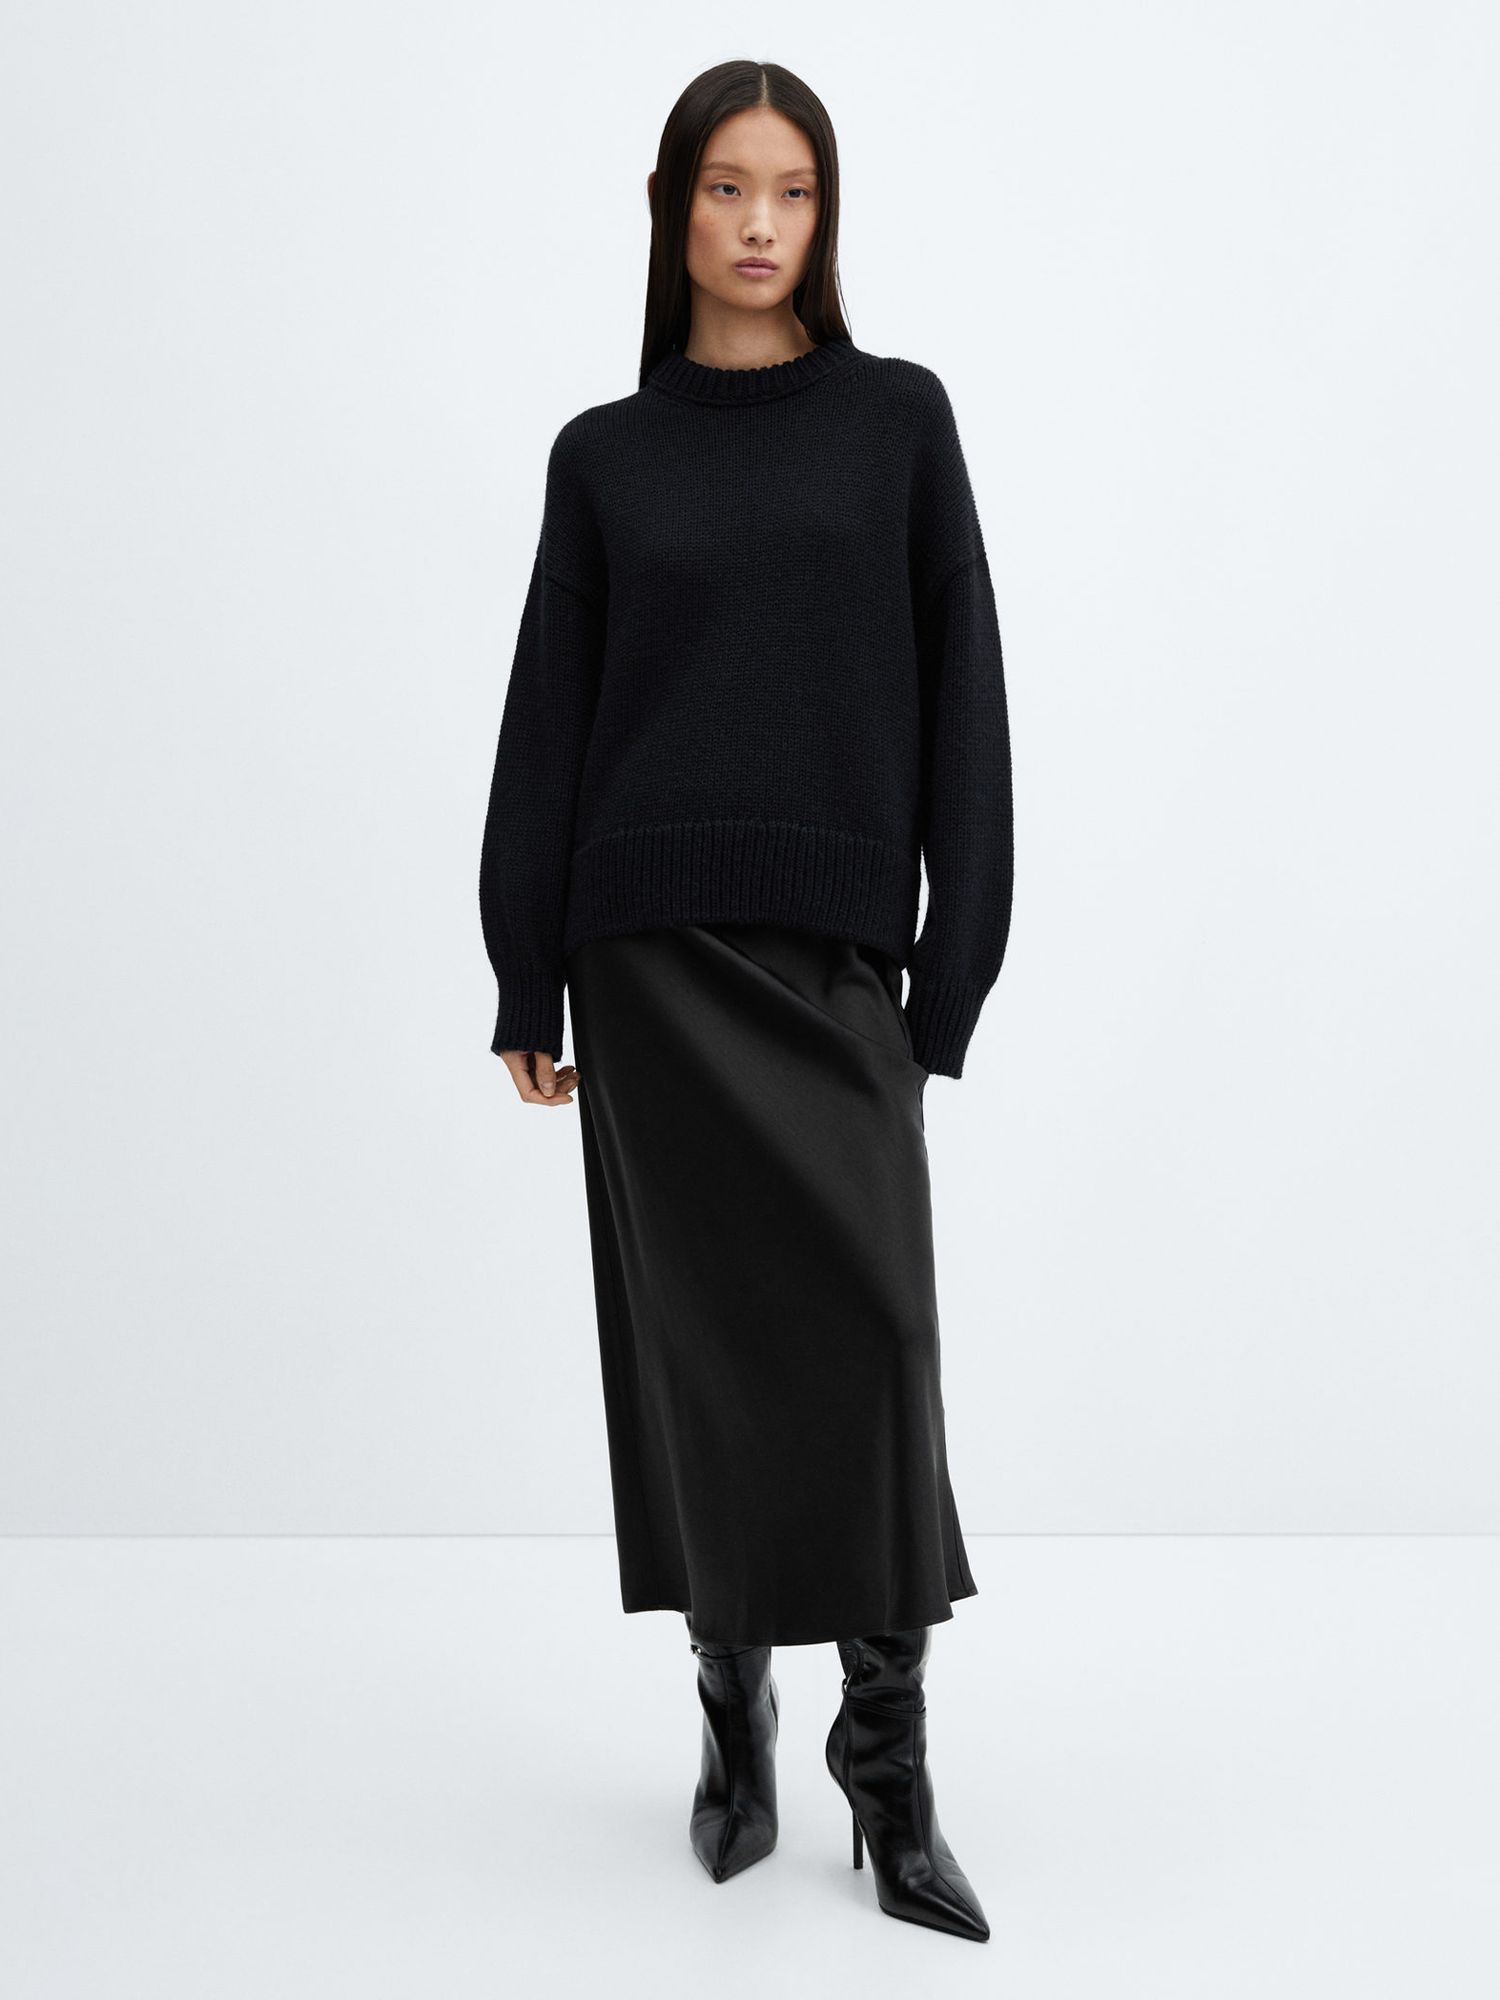 Mango Mia Satin Midi Skirt, Black at John Lewis & Partners